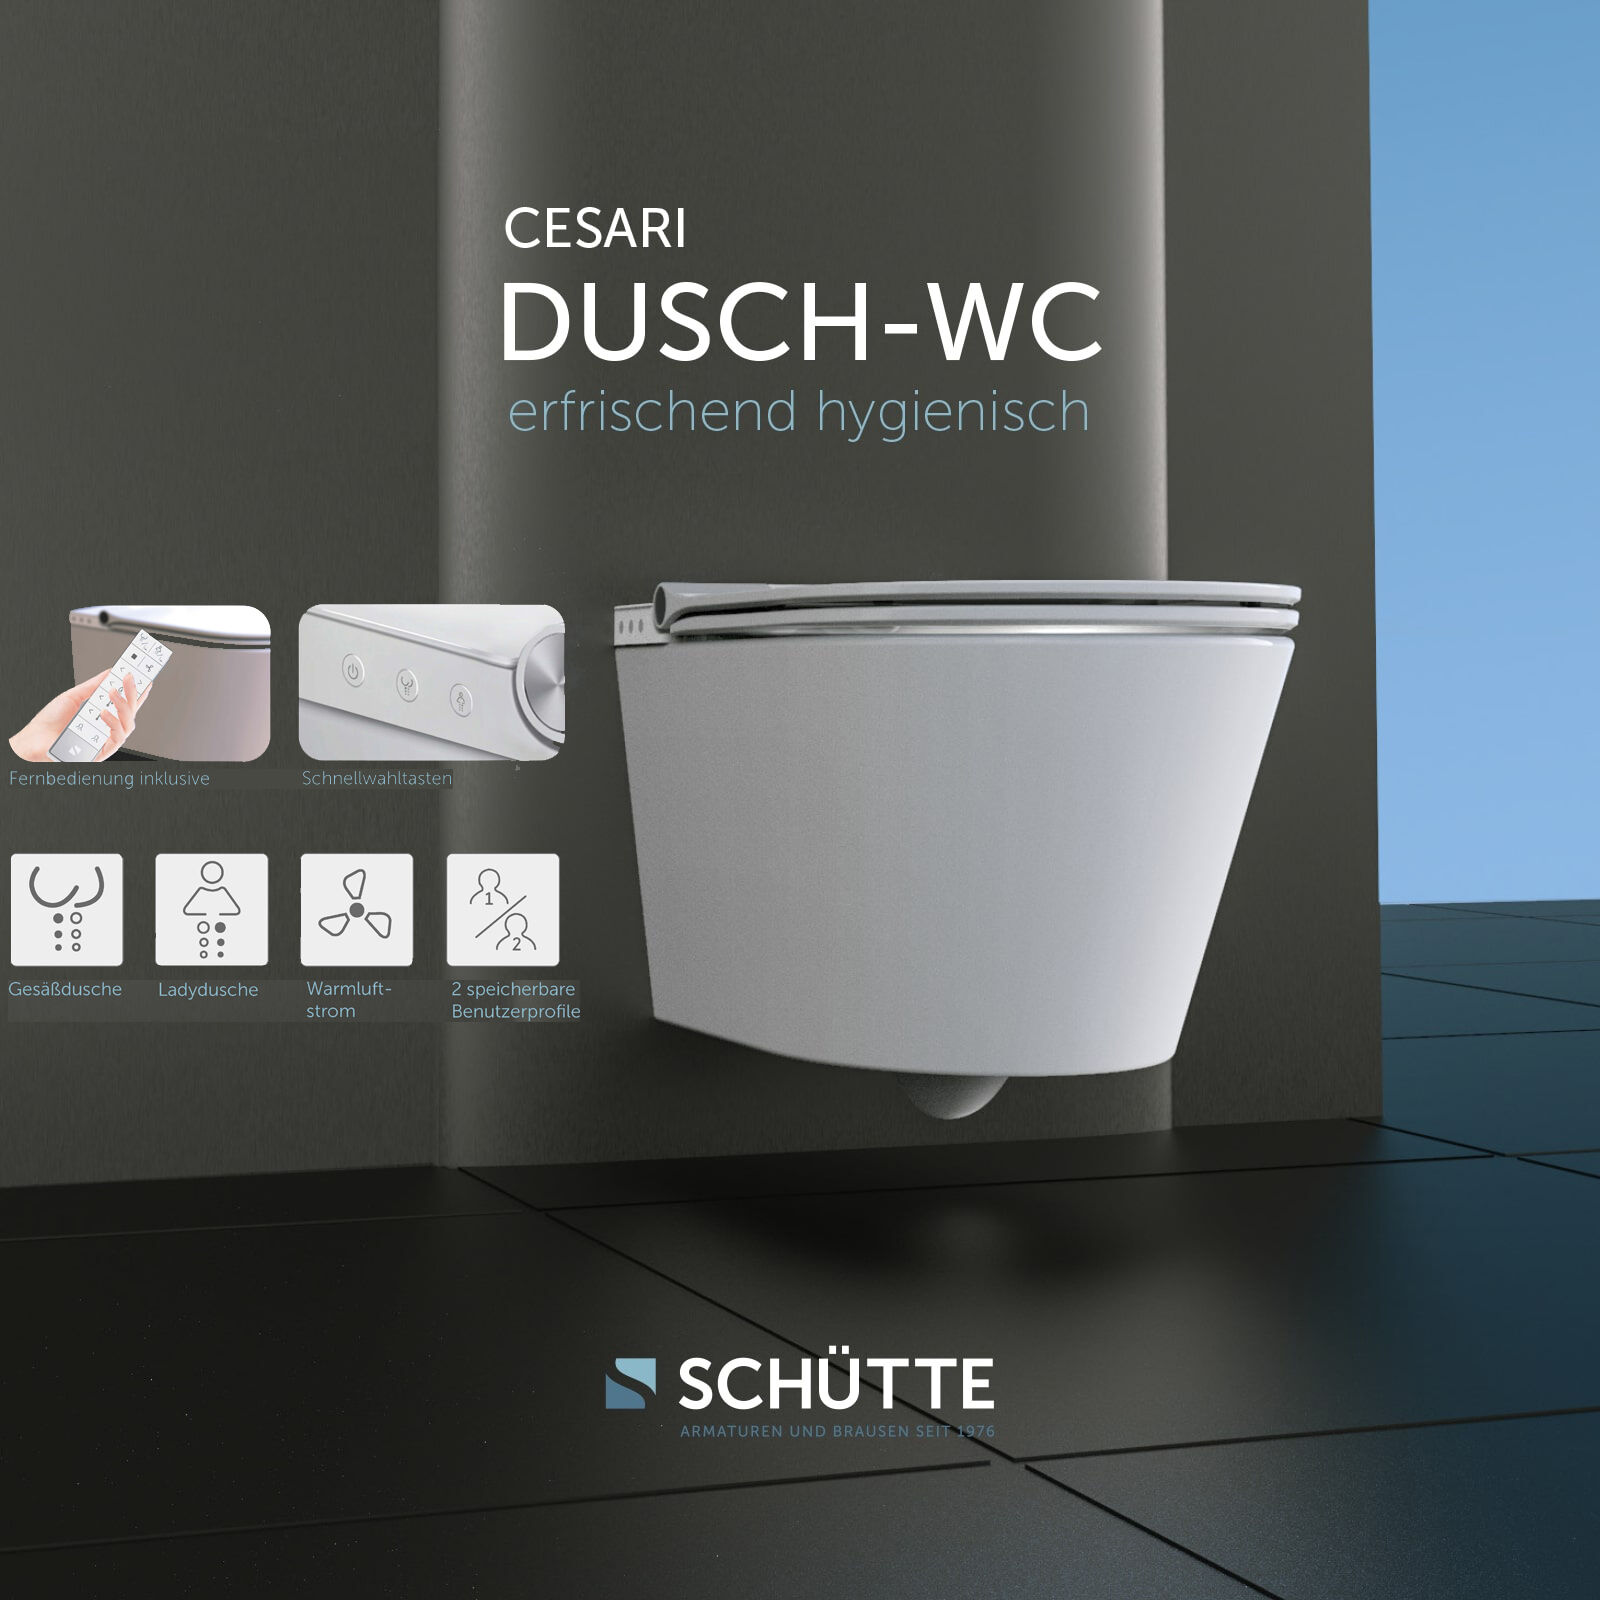 Schütte CESARI Dusch WC, spülrandlos, mit Slim WC-Sitz | BadeDu